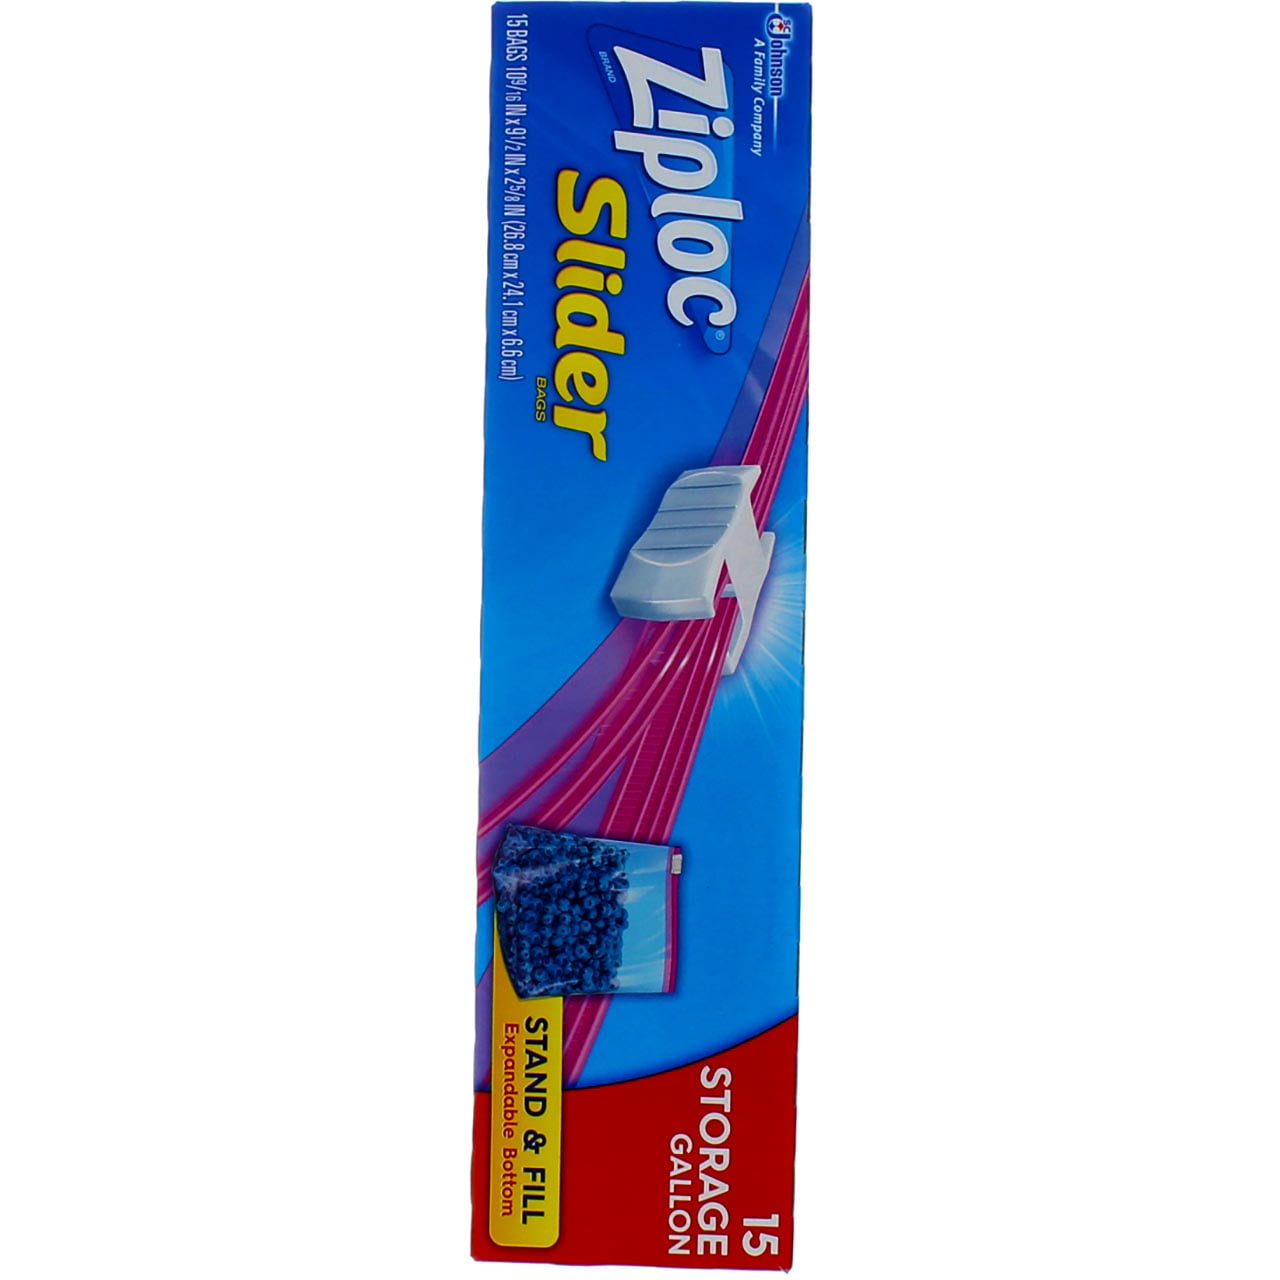 Ziploc Easy Zipper Storage Bags, Gallon Size, 15-Pack